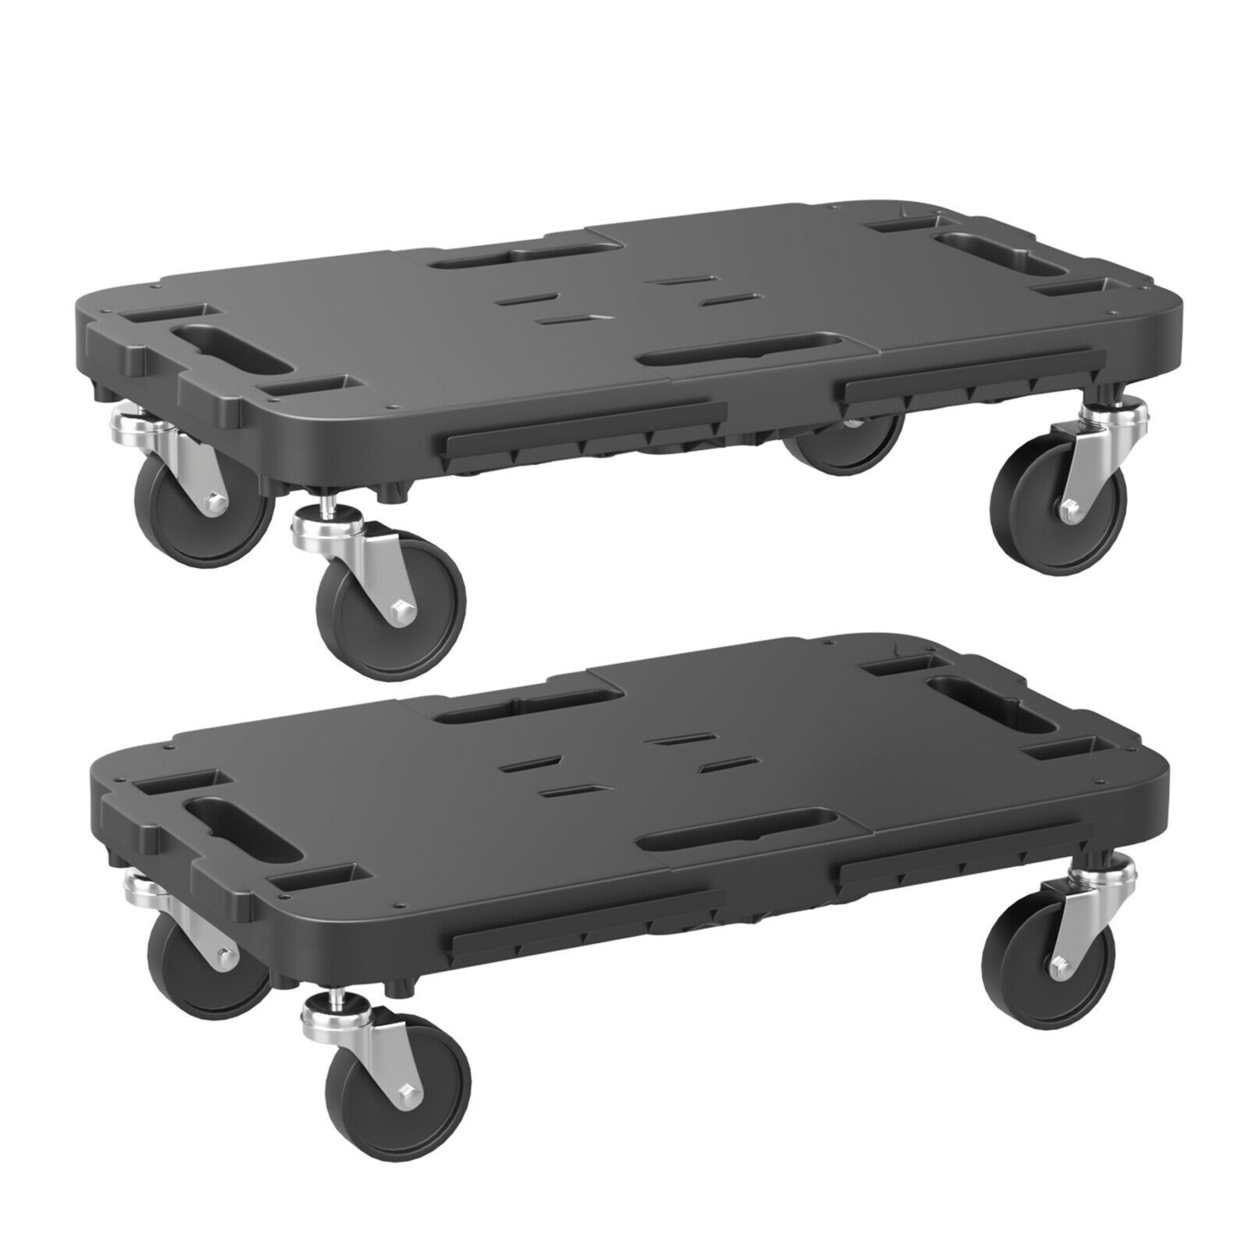 Platform Dolly Interlocking Furniture Mover 660lbs Weight Capacity - 4 Pcs